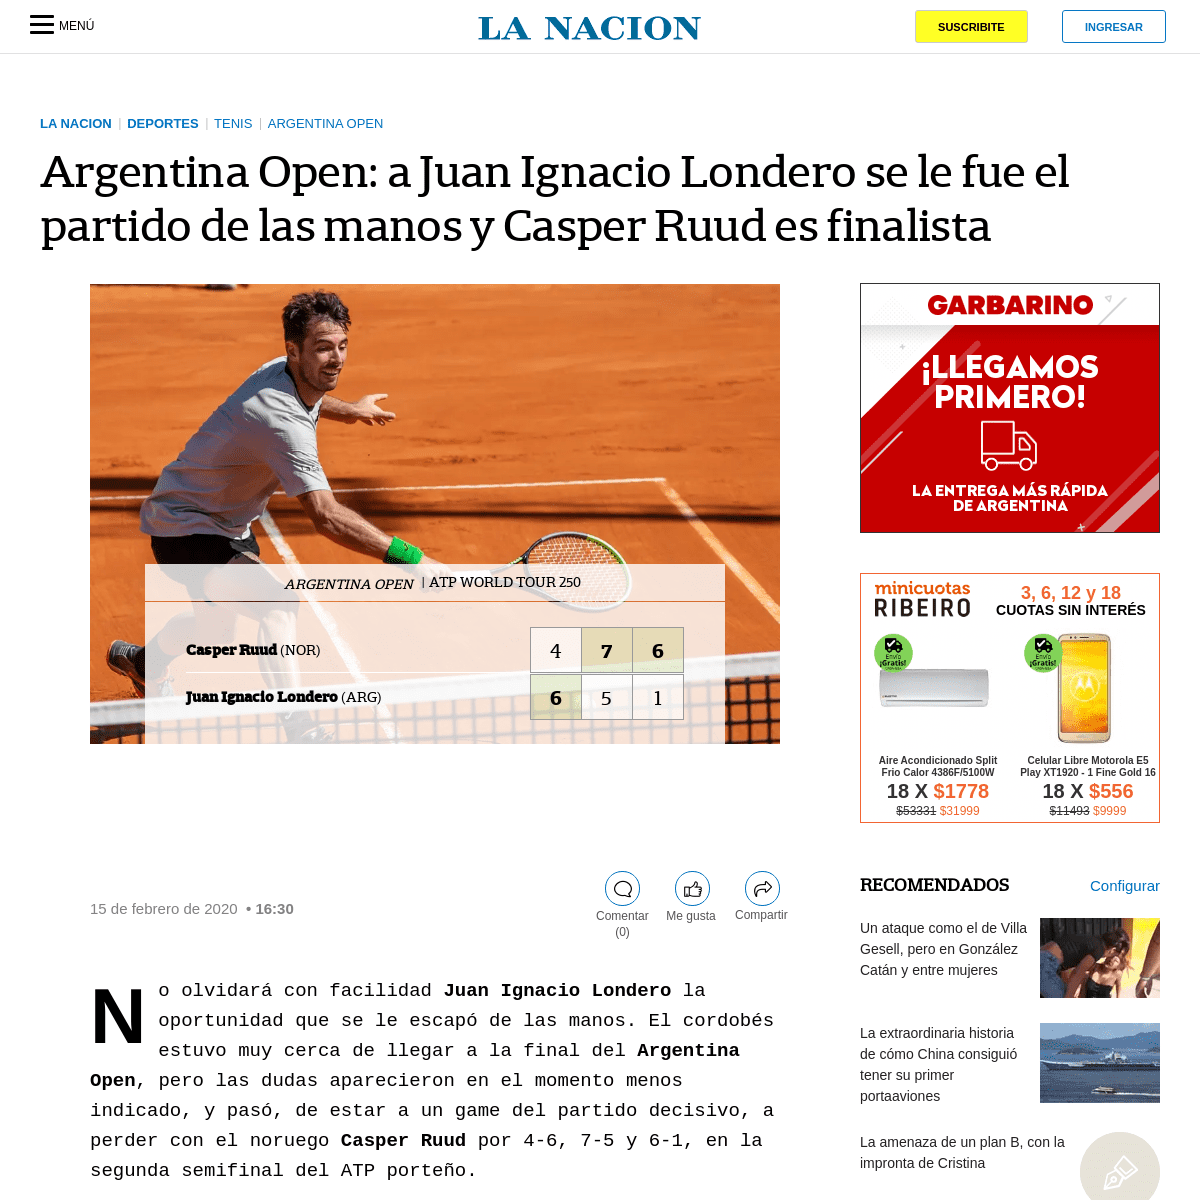 A complete backup of www.lanacion.com.ar/deportes/tenis/argentina-open-juan-ignacio-londero-casper-ruud-juegan-nid2334166